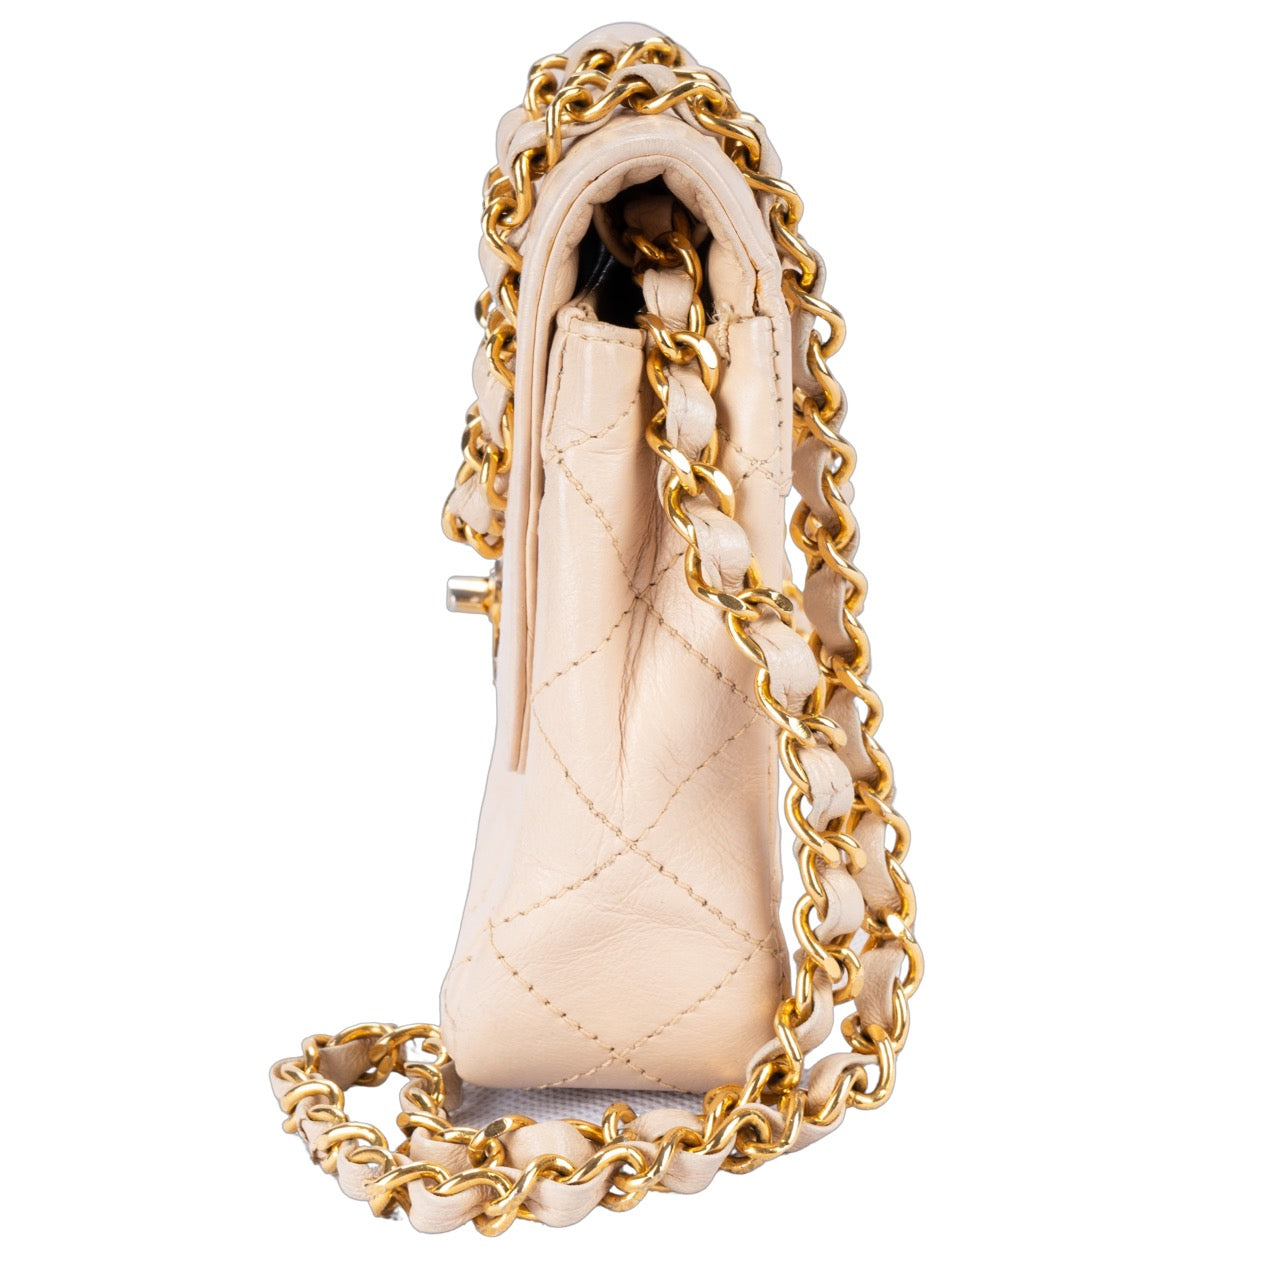 Chanel Quilted Lambskin Bicolor Crossbody Bag beige